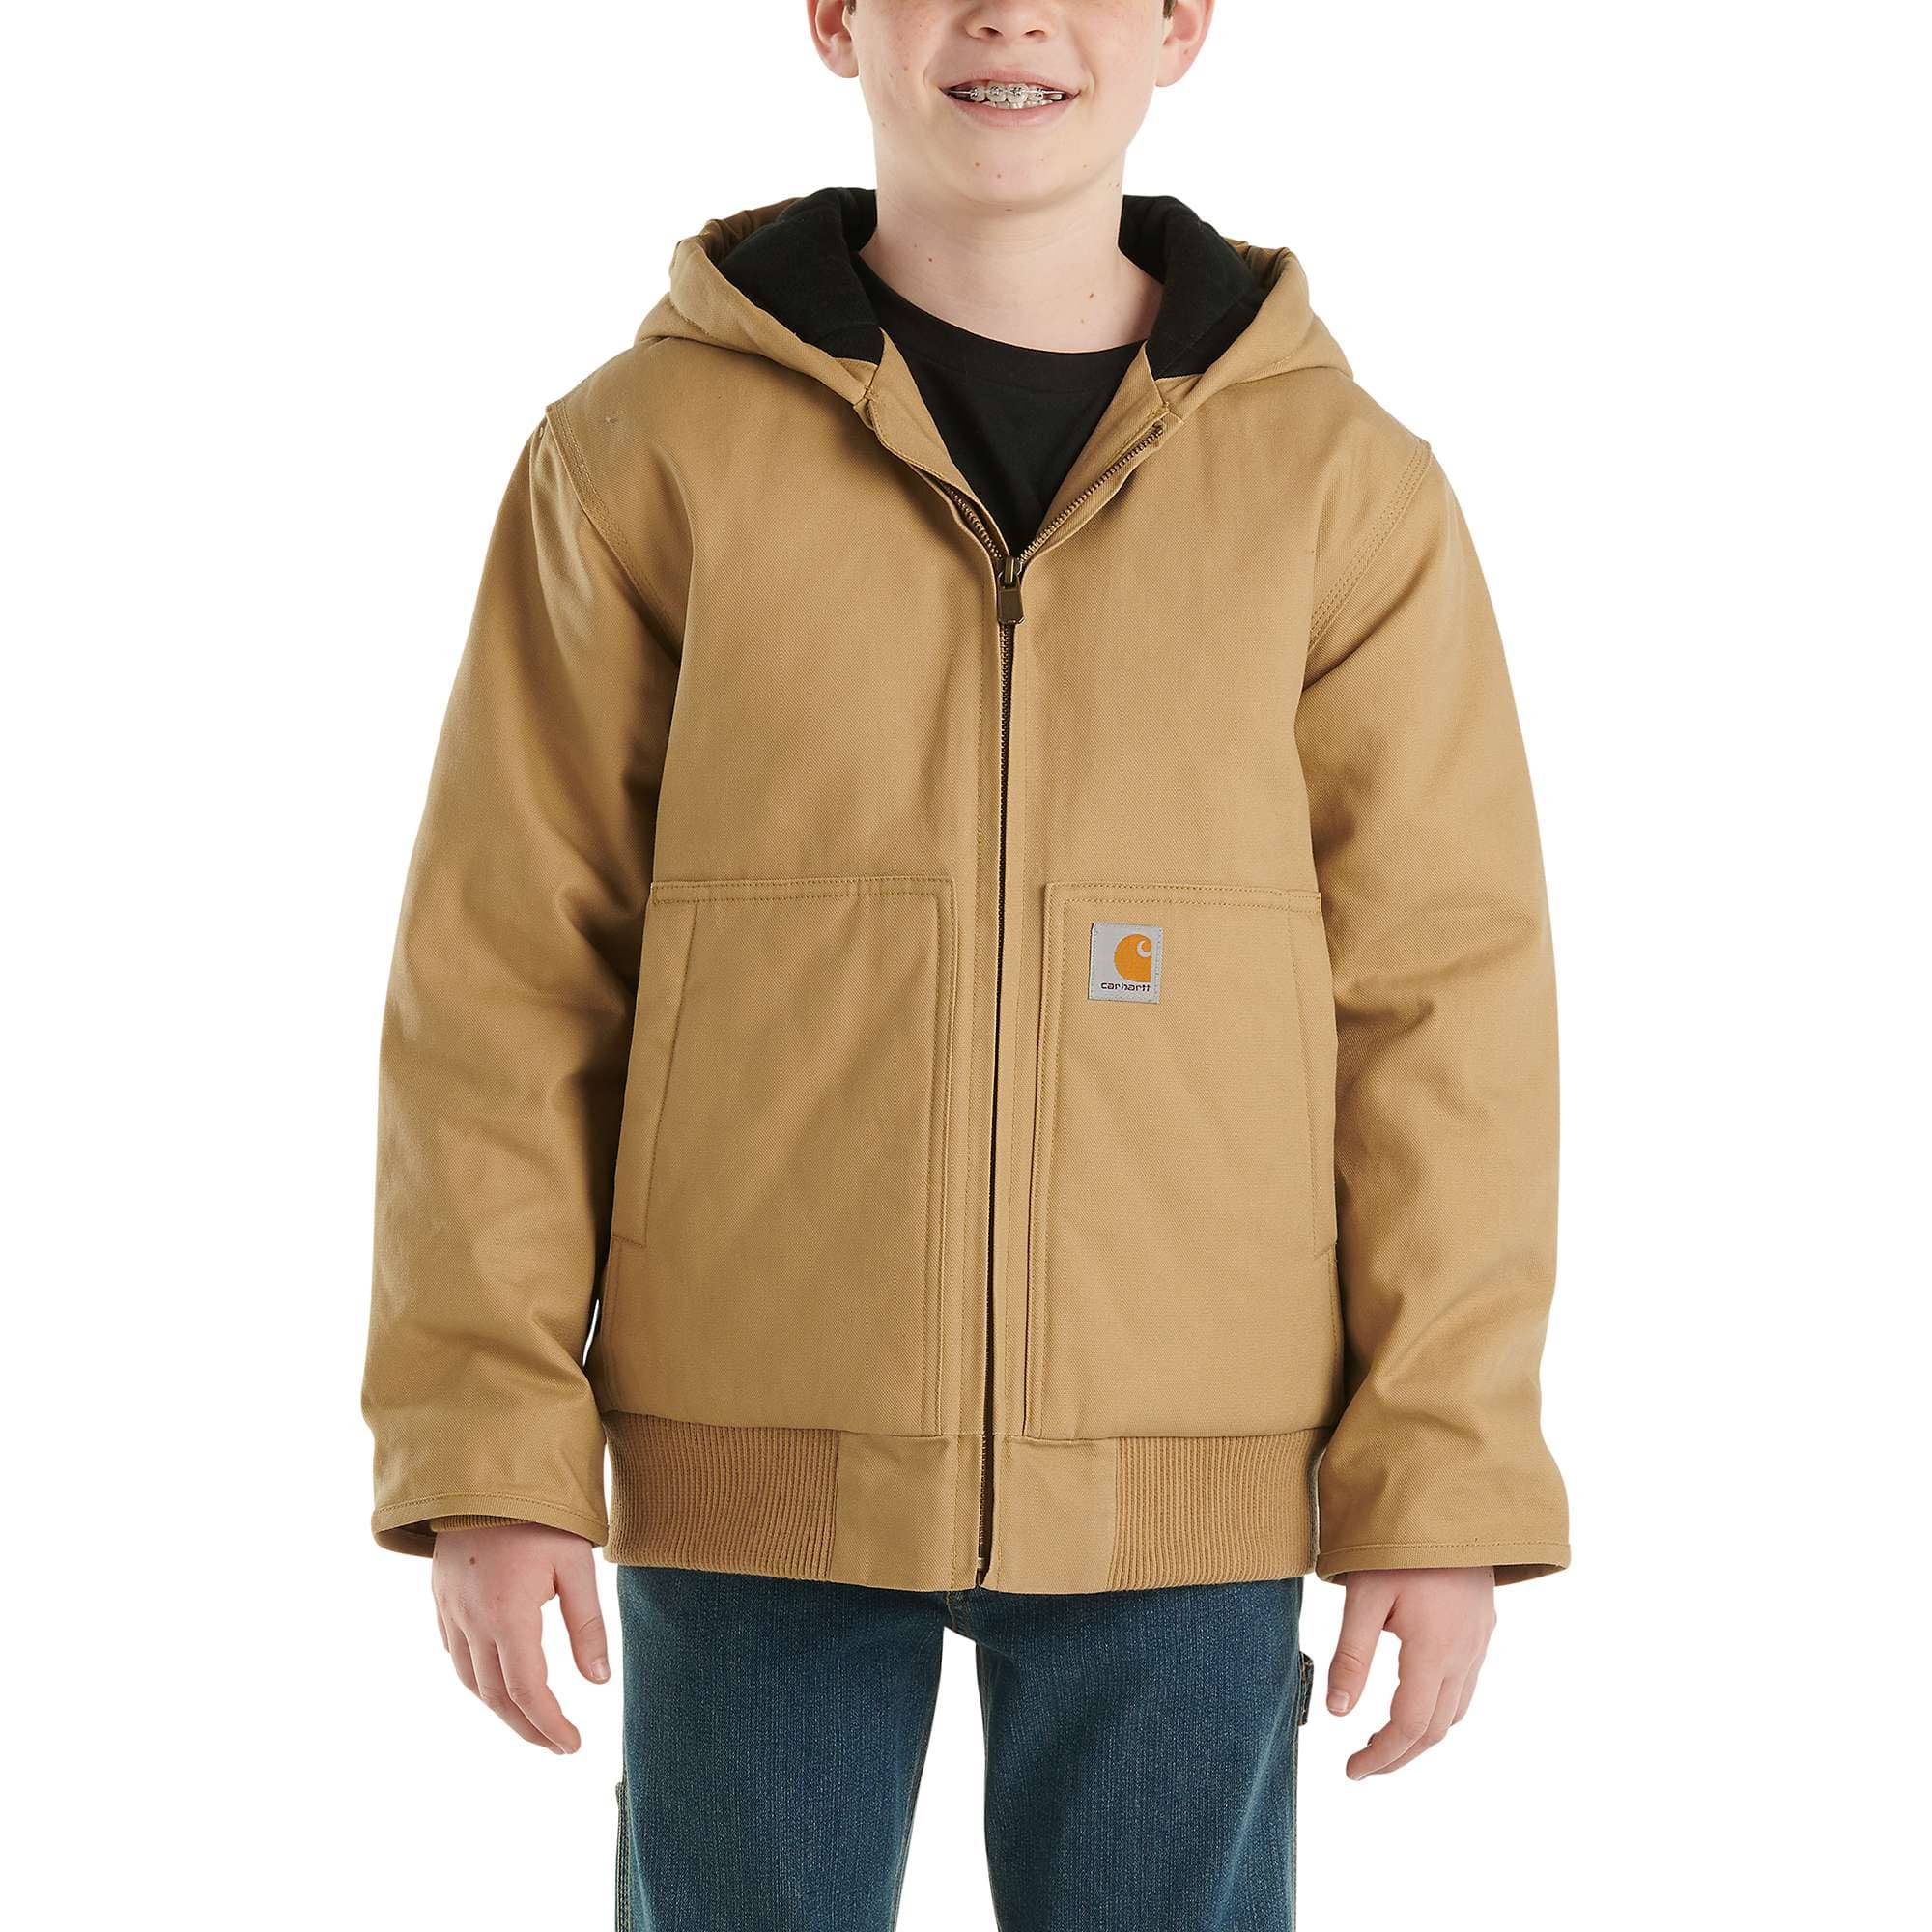 Carhartt Jackets: Boy's CP8545 BLK Black Cotton Canvas Lined Jacket